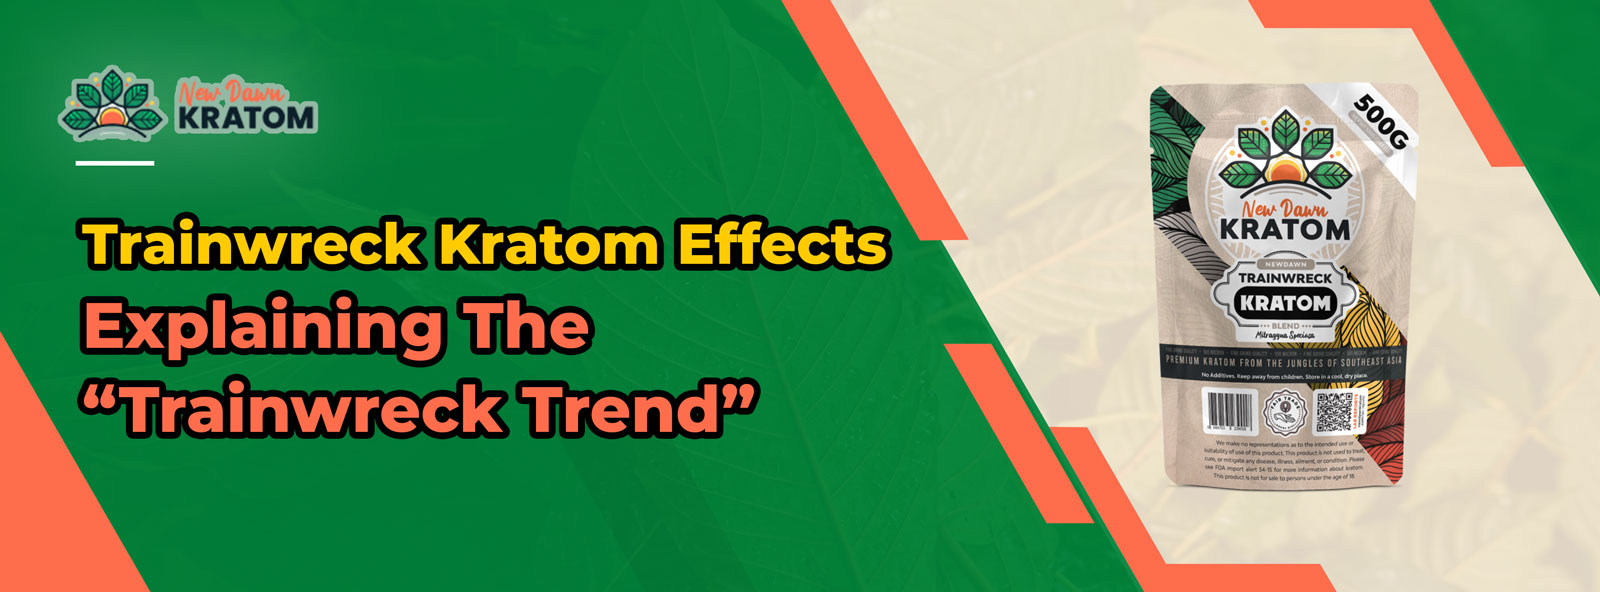 trainwreck kratom effects – explaining the “trainwreck trend”